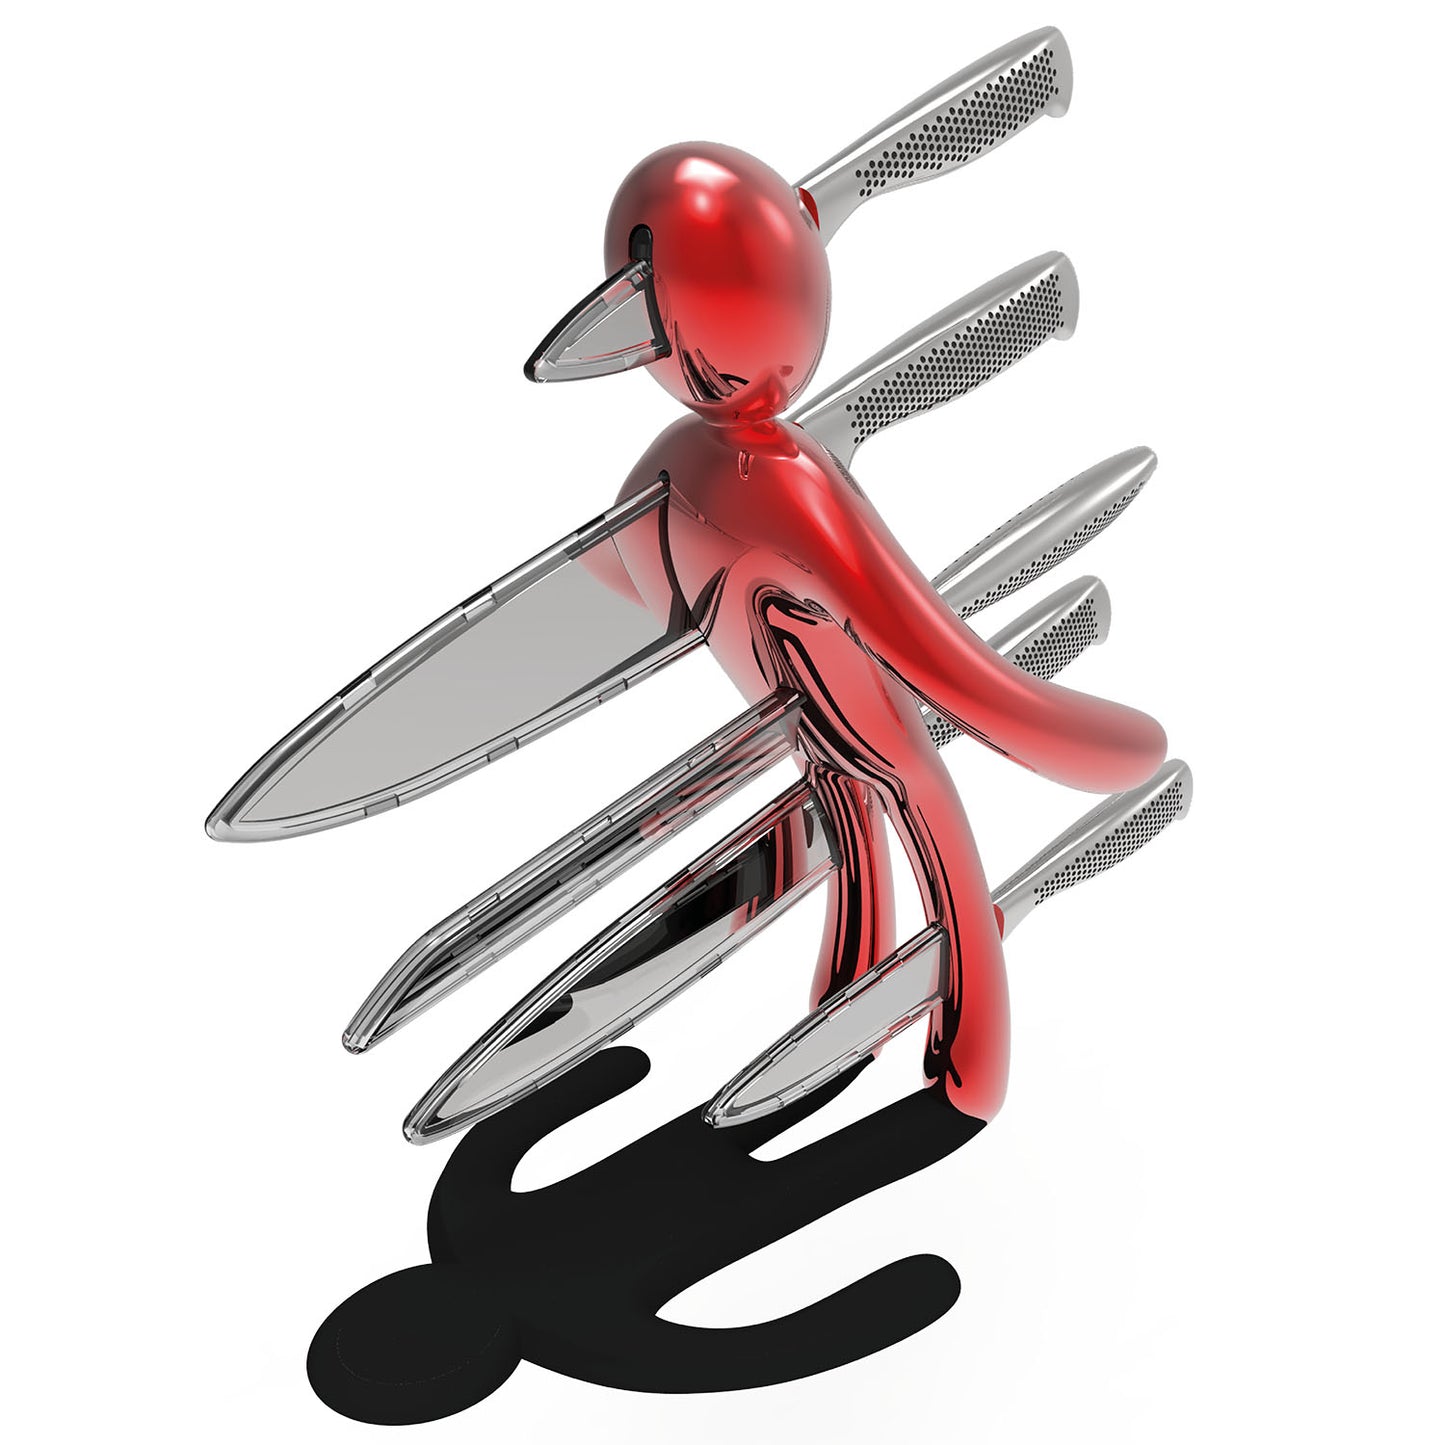 Voodoo/TheEx "Anniversary Edition" Knife Set - Red Steel Holder